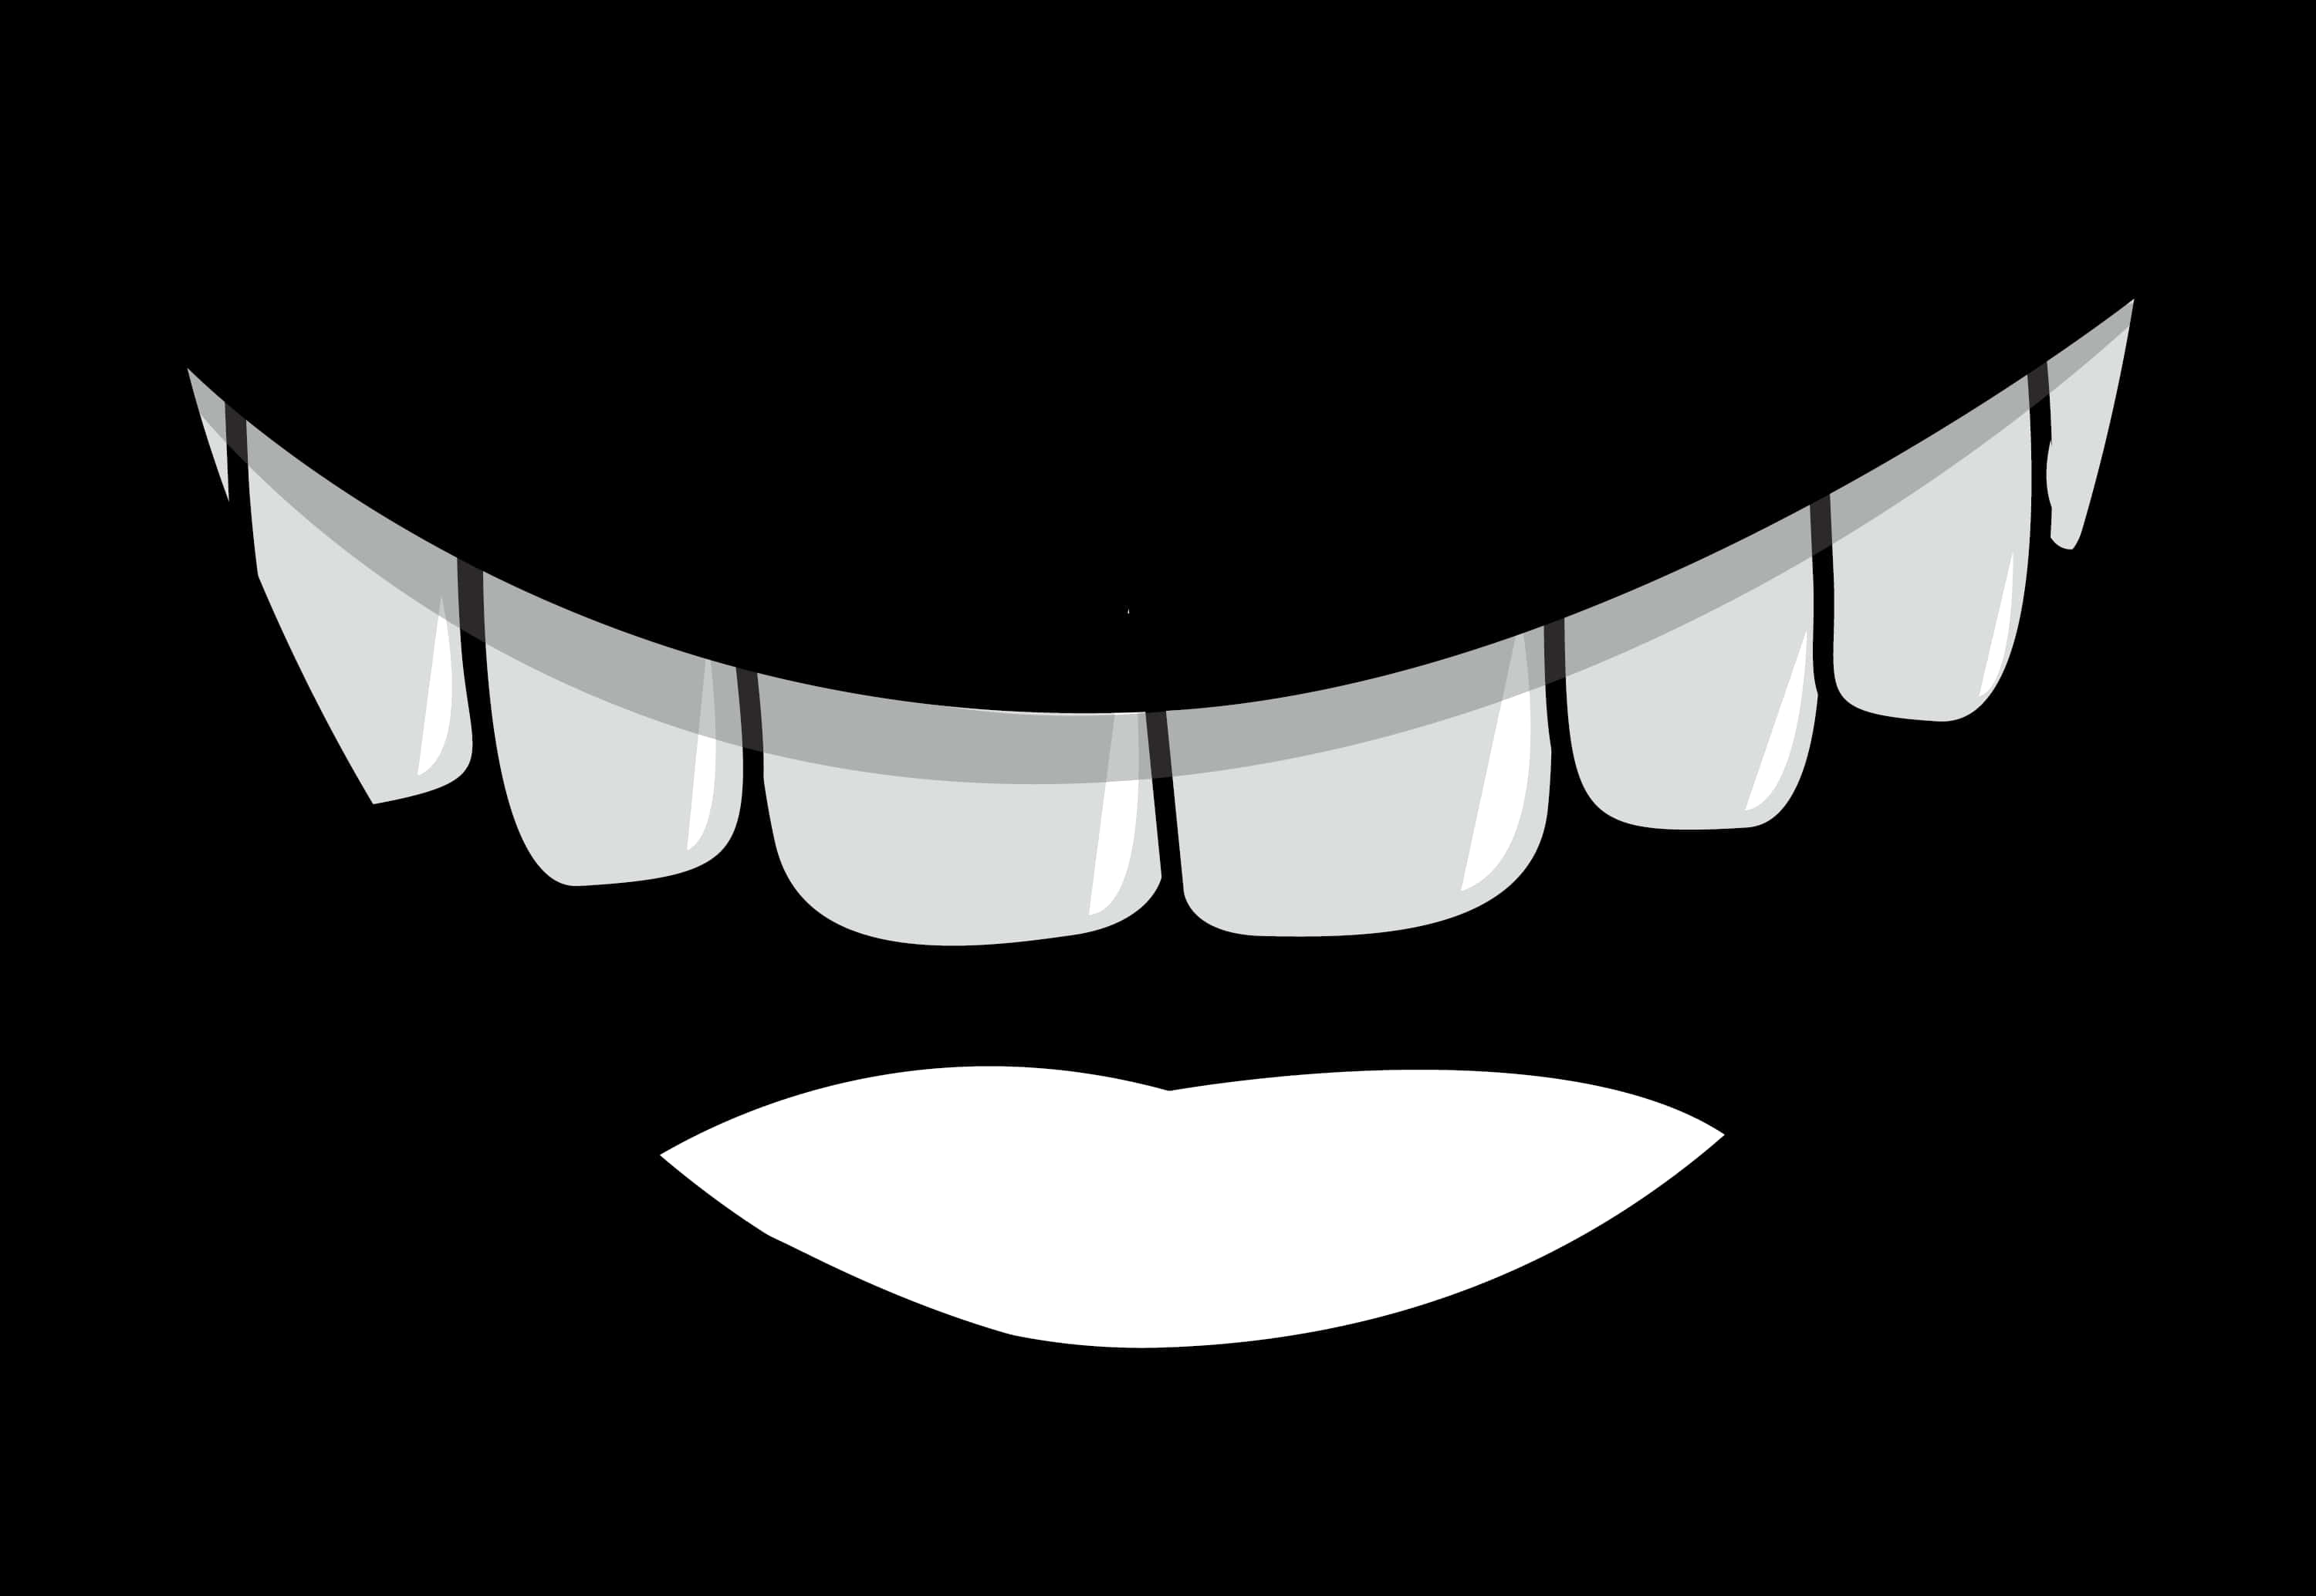 Smiling Mouth Vector Illustration SVG